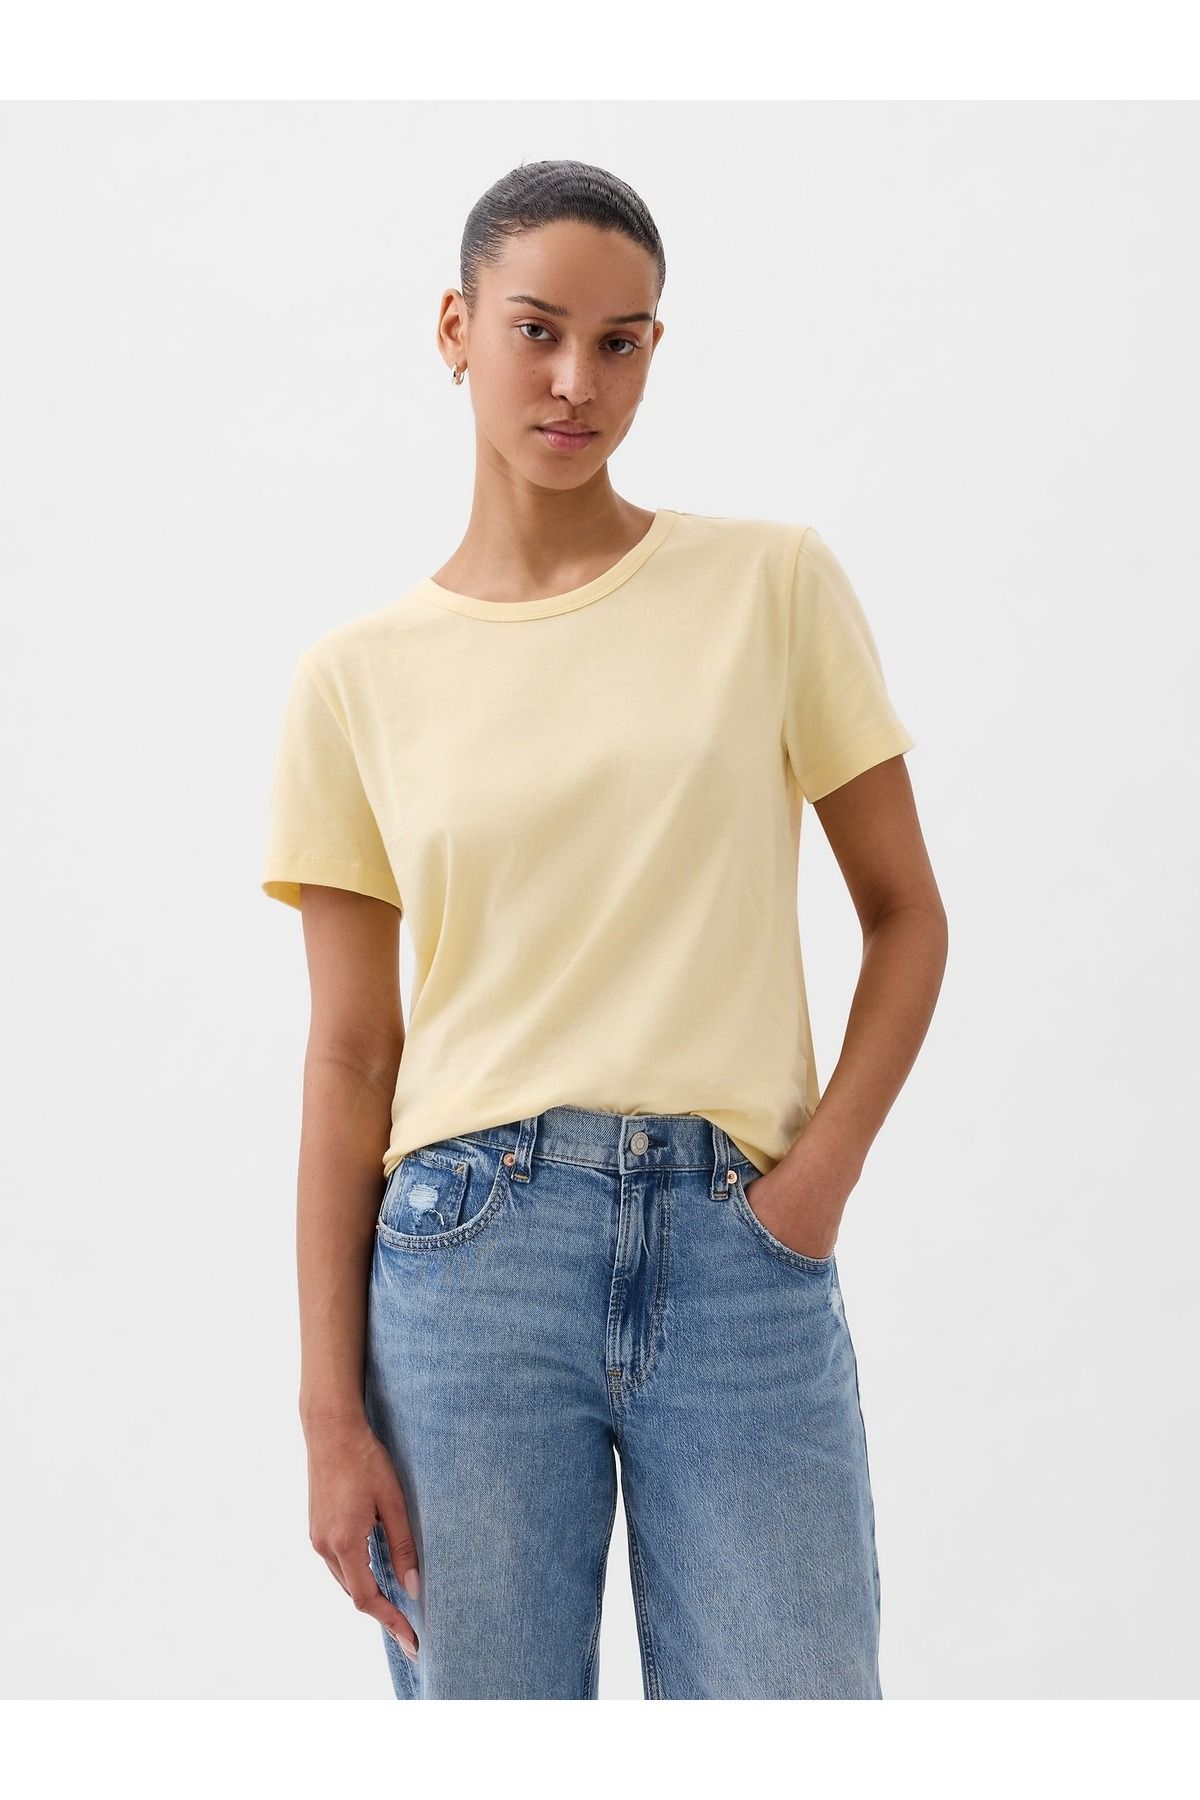 GAP Kadın Sarı %100 Pamuk Vintage Bisiklet Yaka T-Shirt